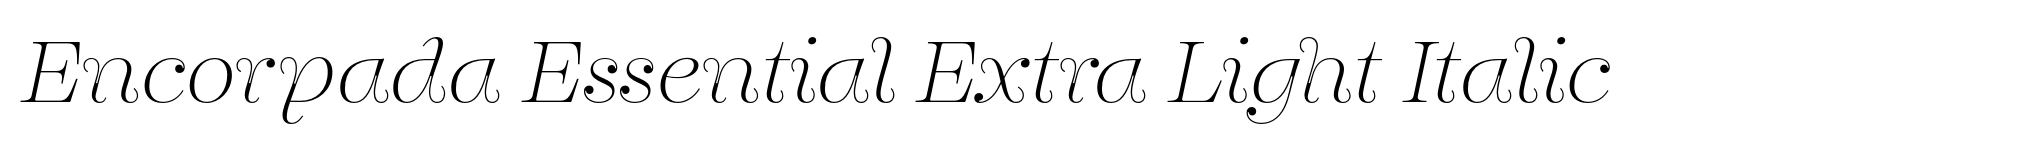 Encorpada Essential Extra Light Italic image